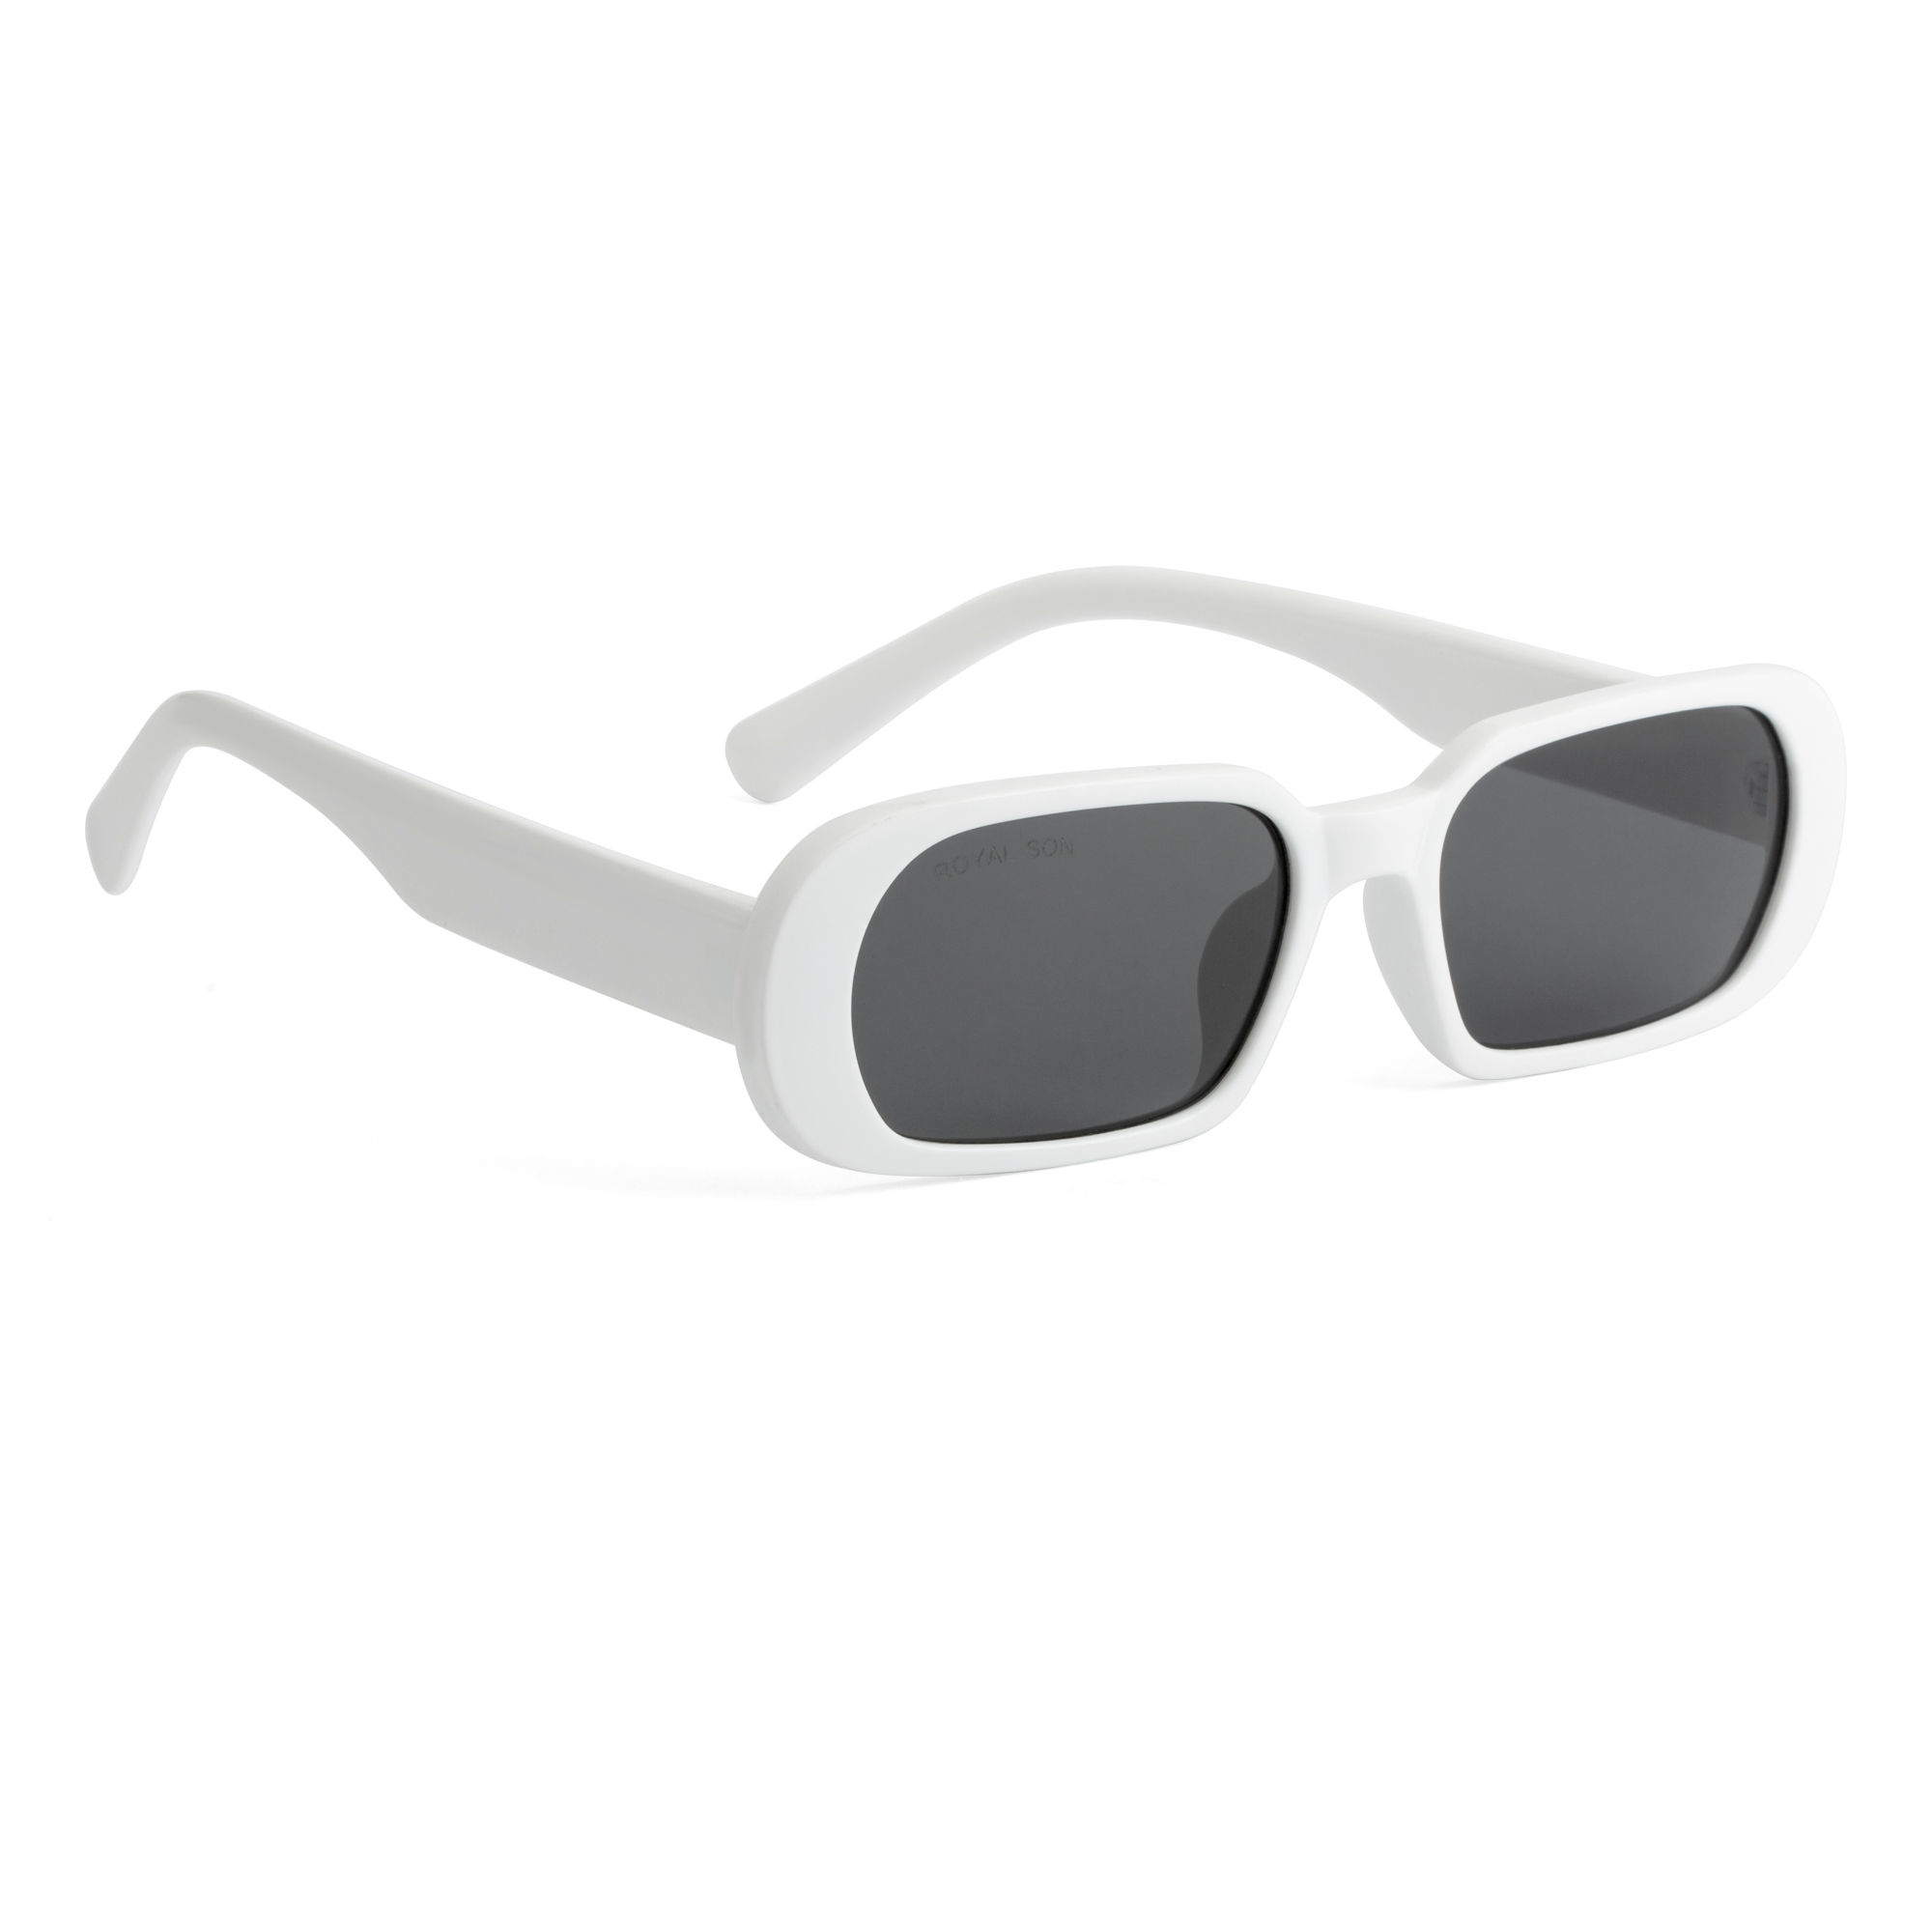 Royal Son Narrow Rectangle UV Protection Sunglasses For Women Sunglasses Black - CHIWM00120-C3